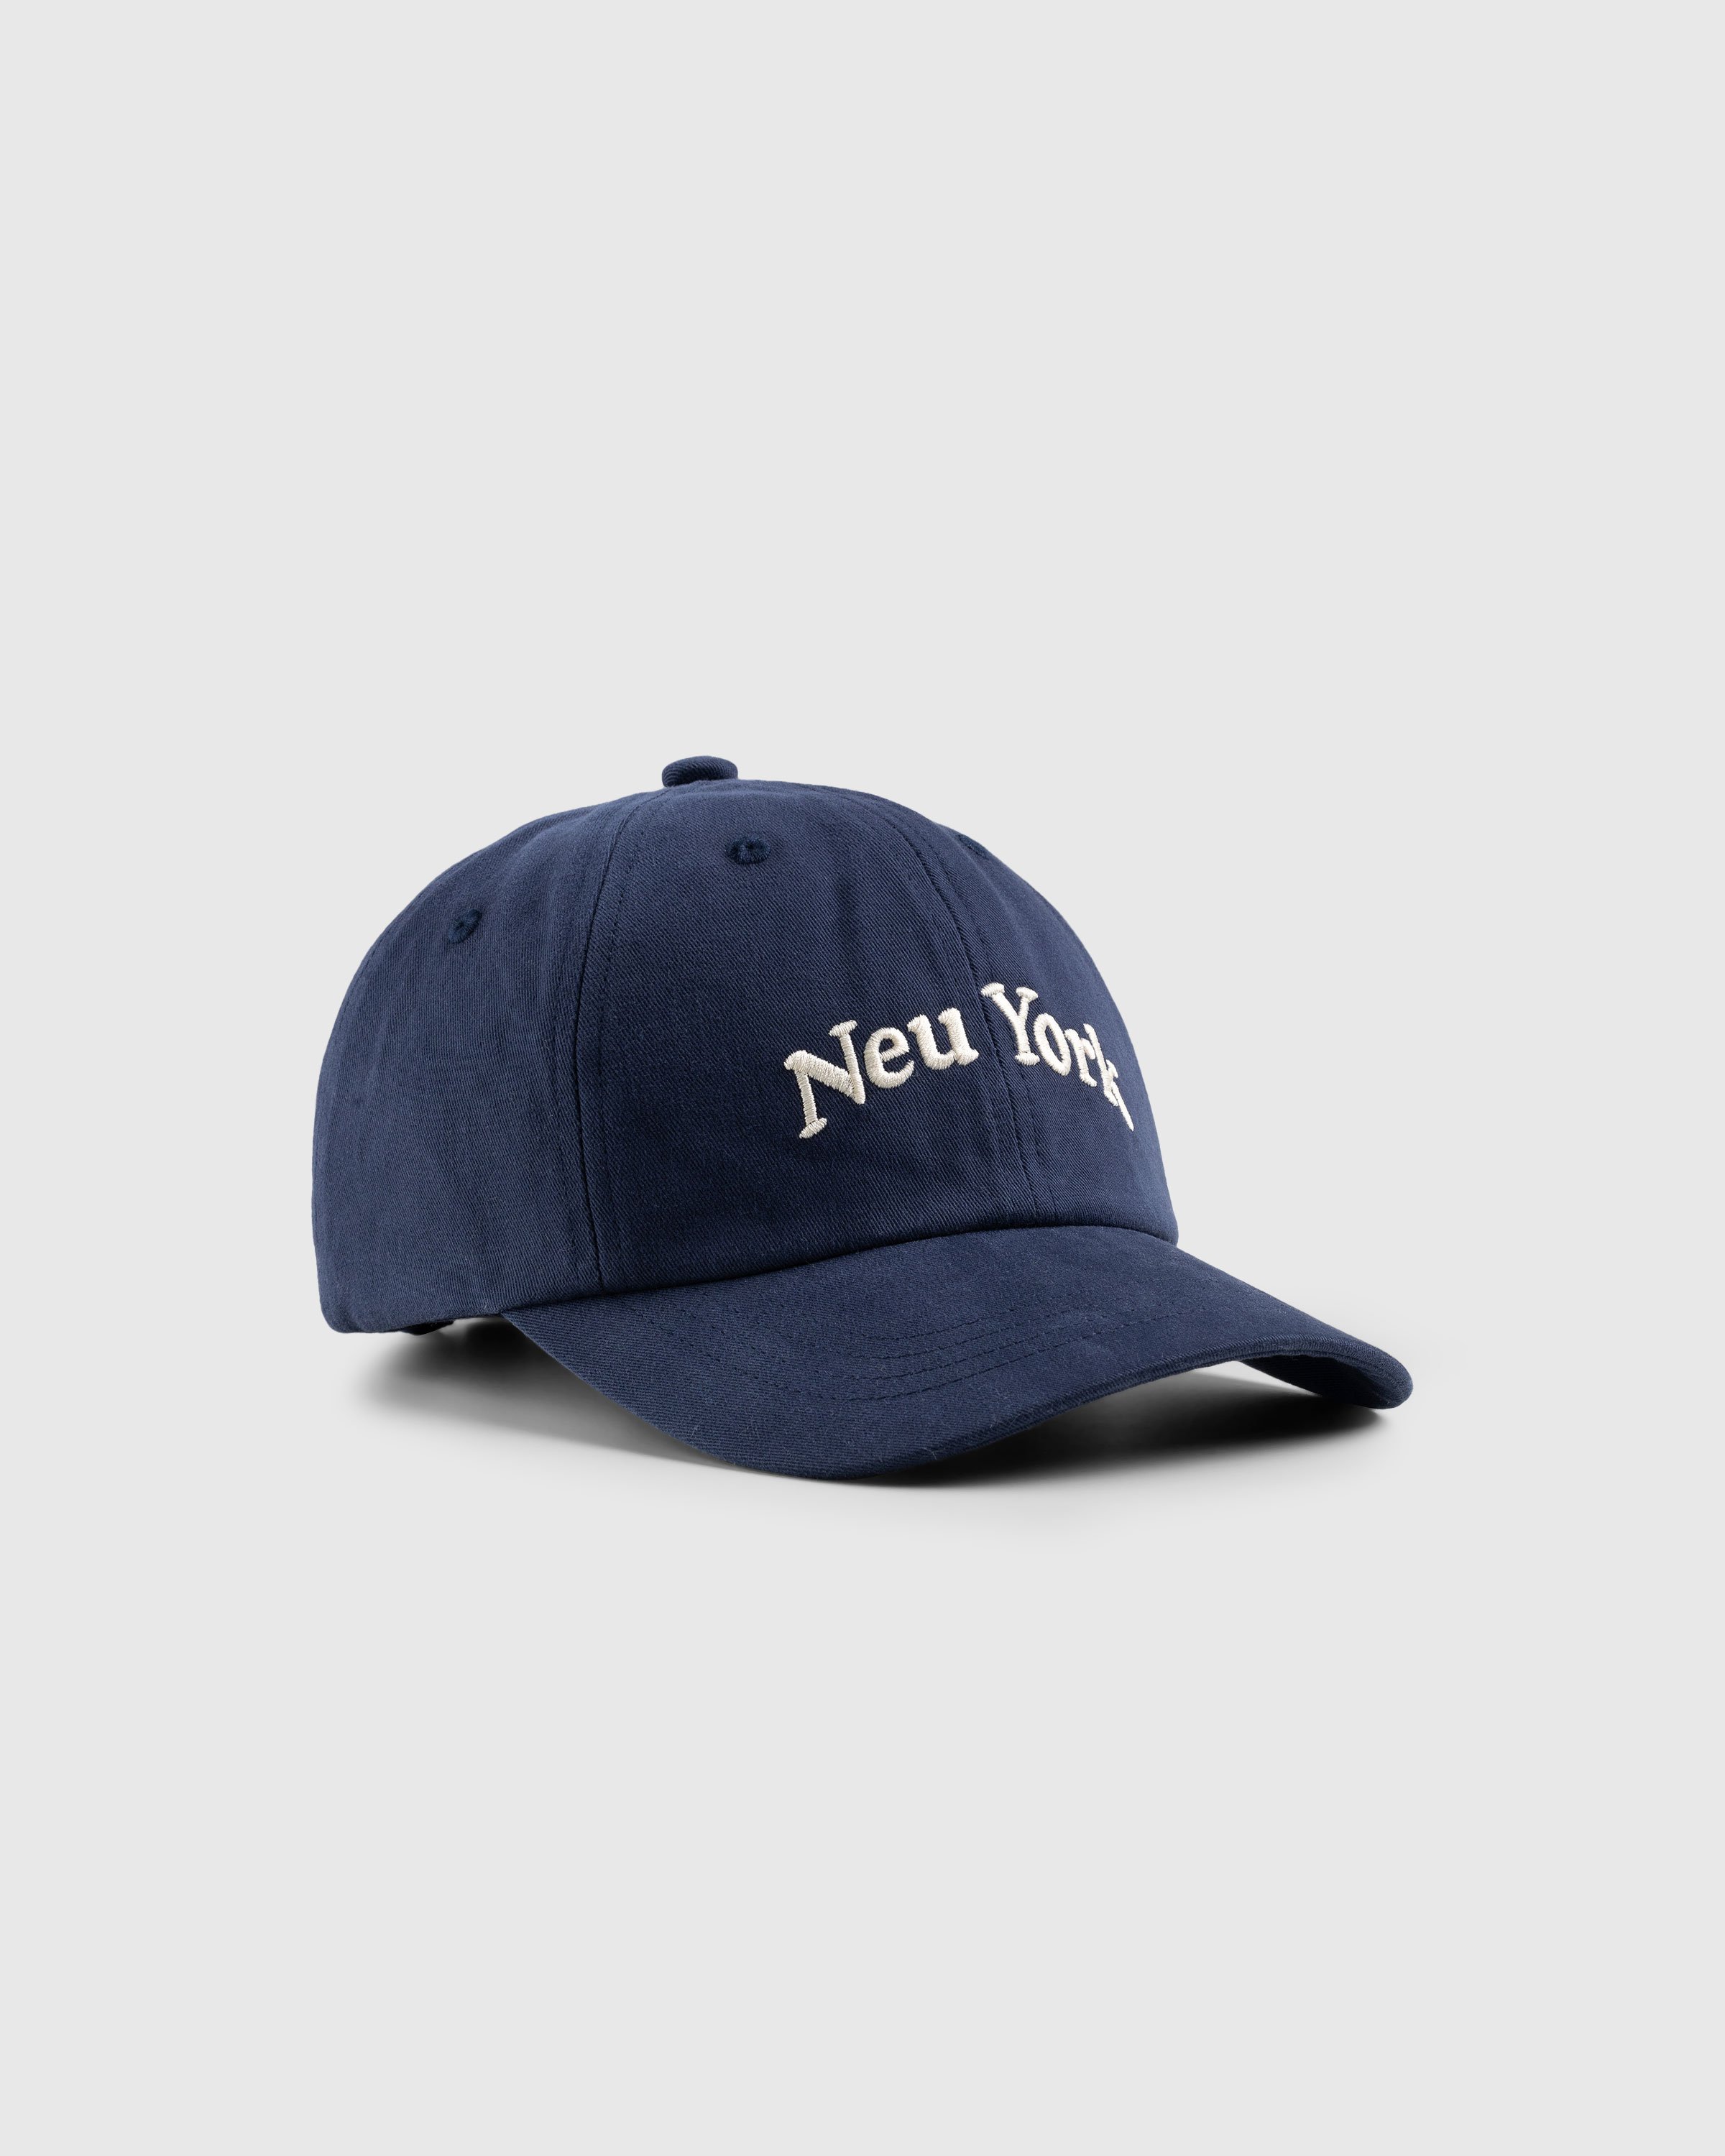 Highsnobiety - Neu York Navy Ball Cap - Accessories - Blue - Image 1